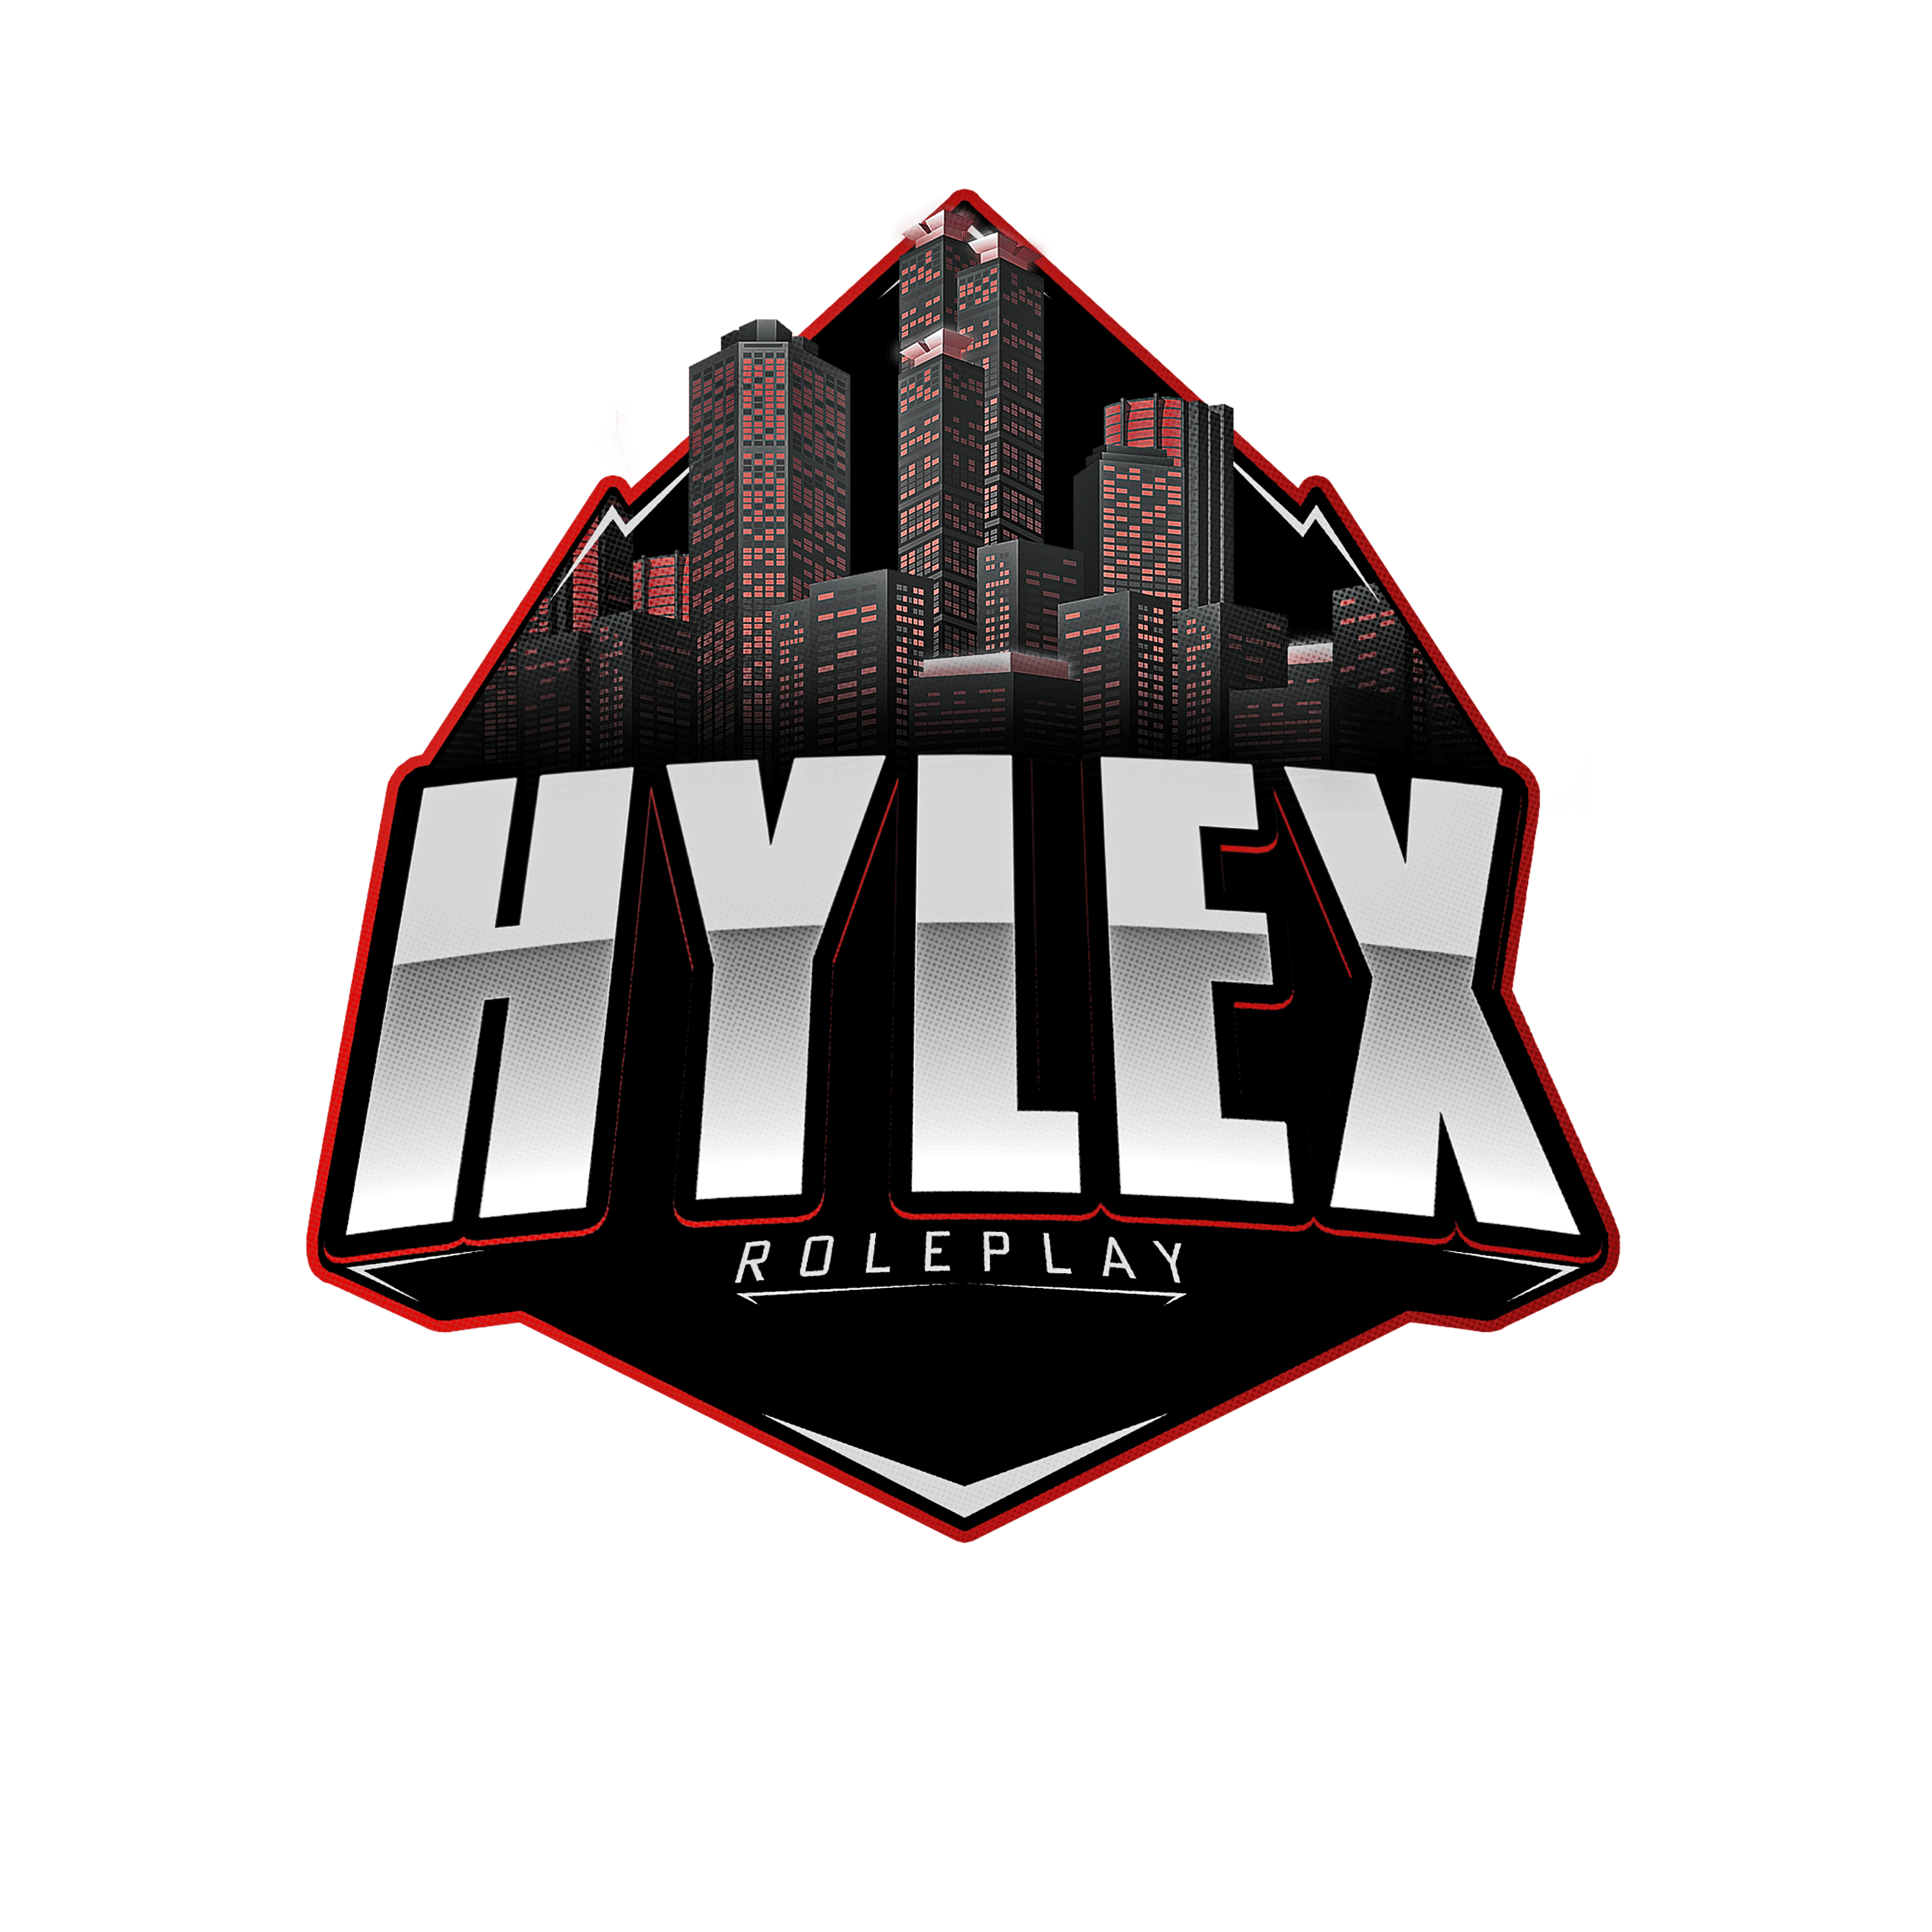 Hylex Roleplay